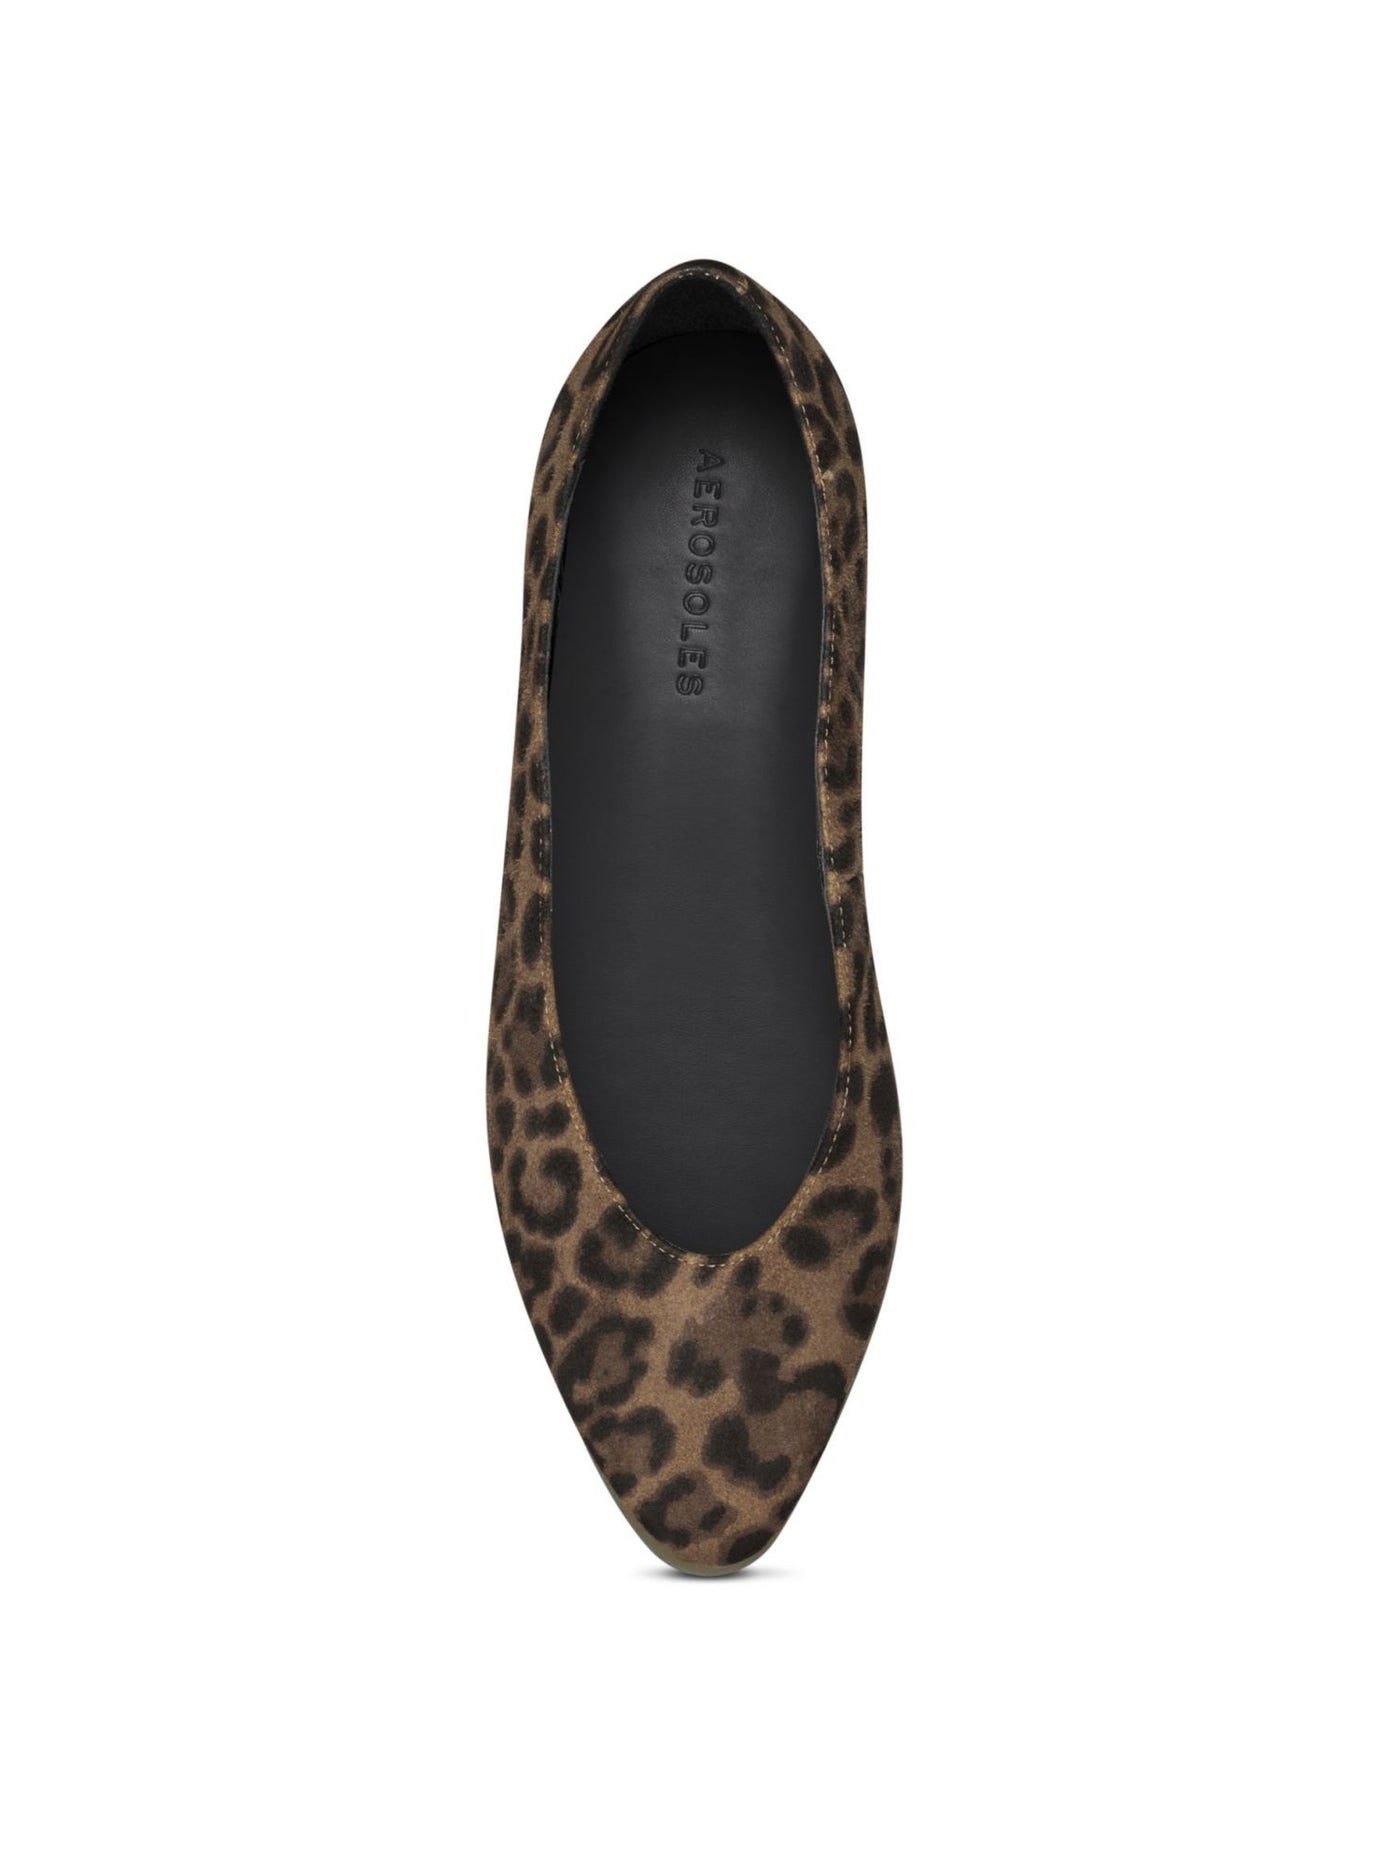 AEROSOLES Womens Brown Leopard Print Padded Virona Almond Toe Wedge Slip On Leather Flats Shoes 8 M